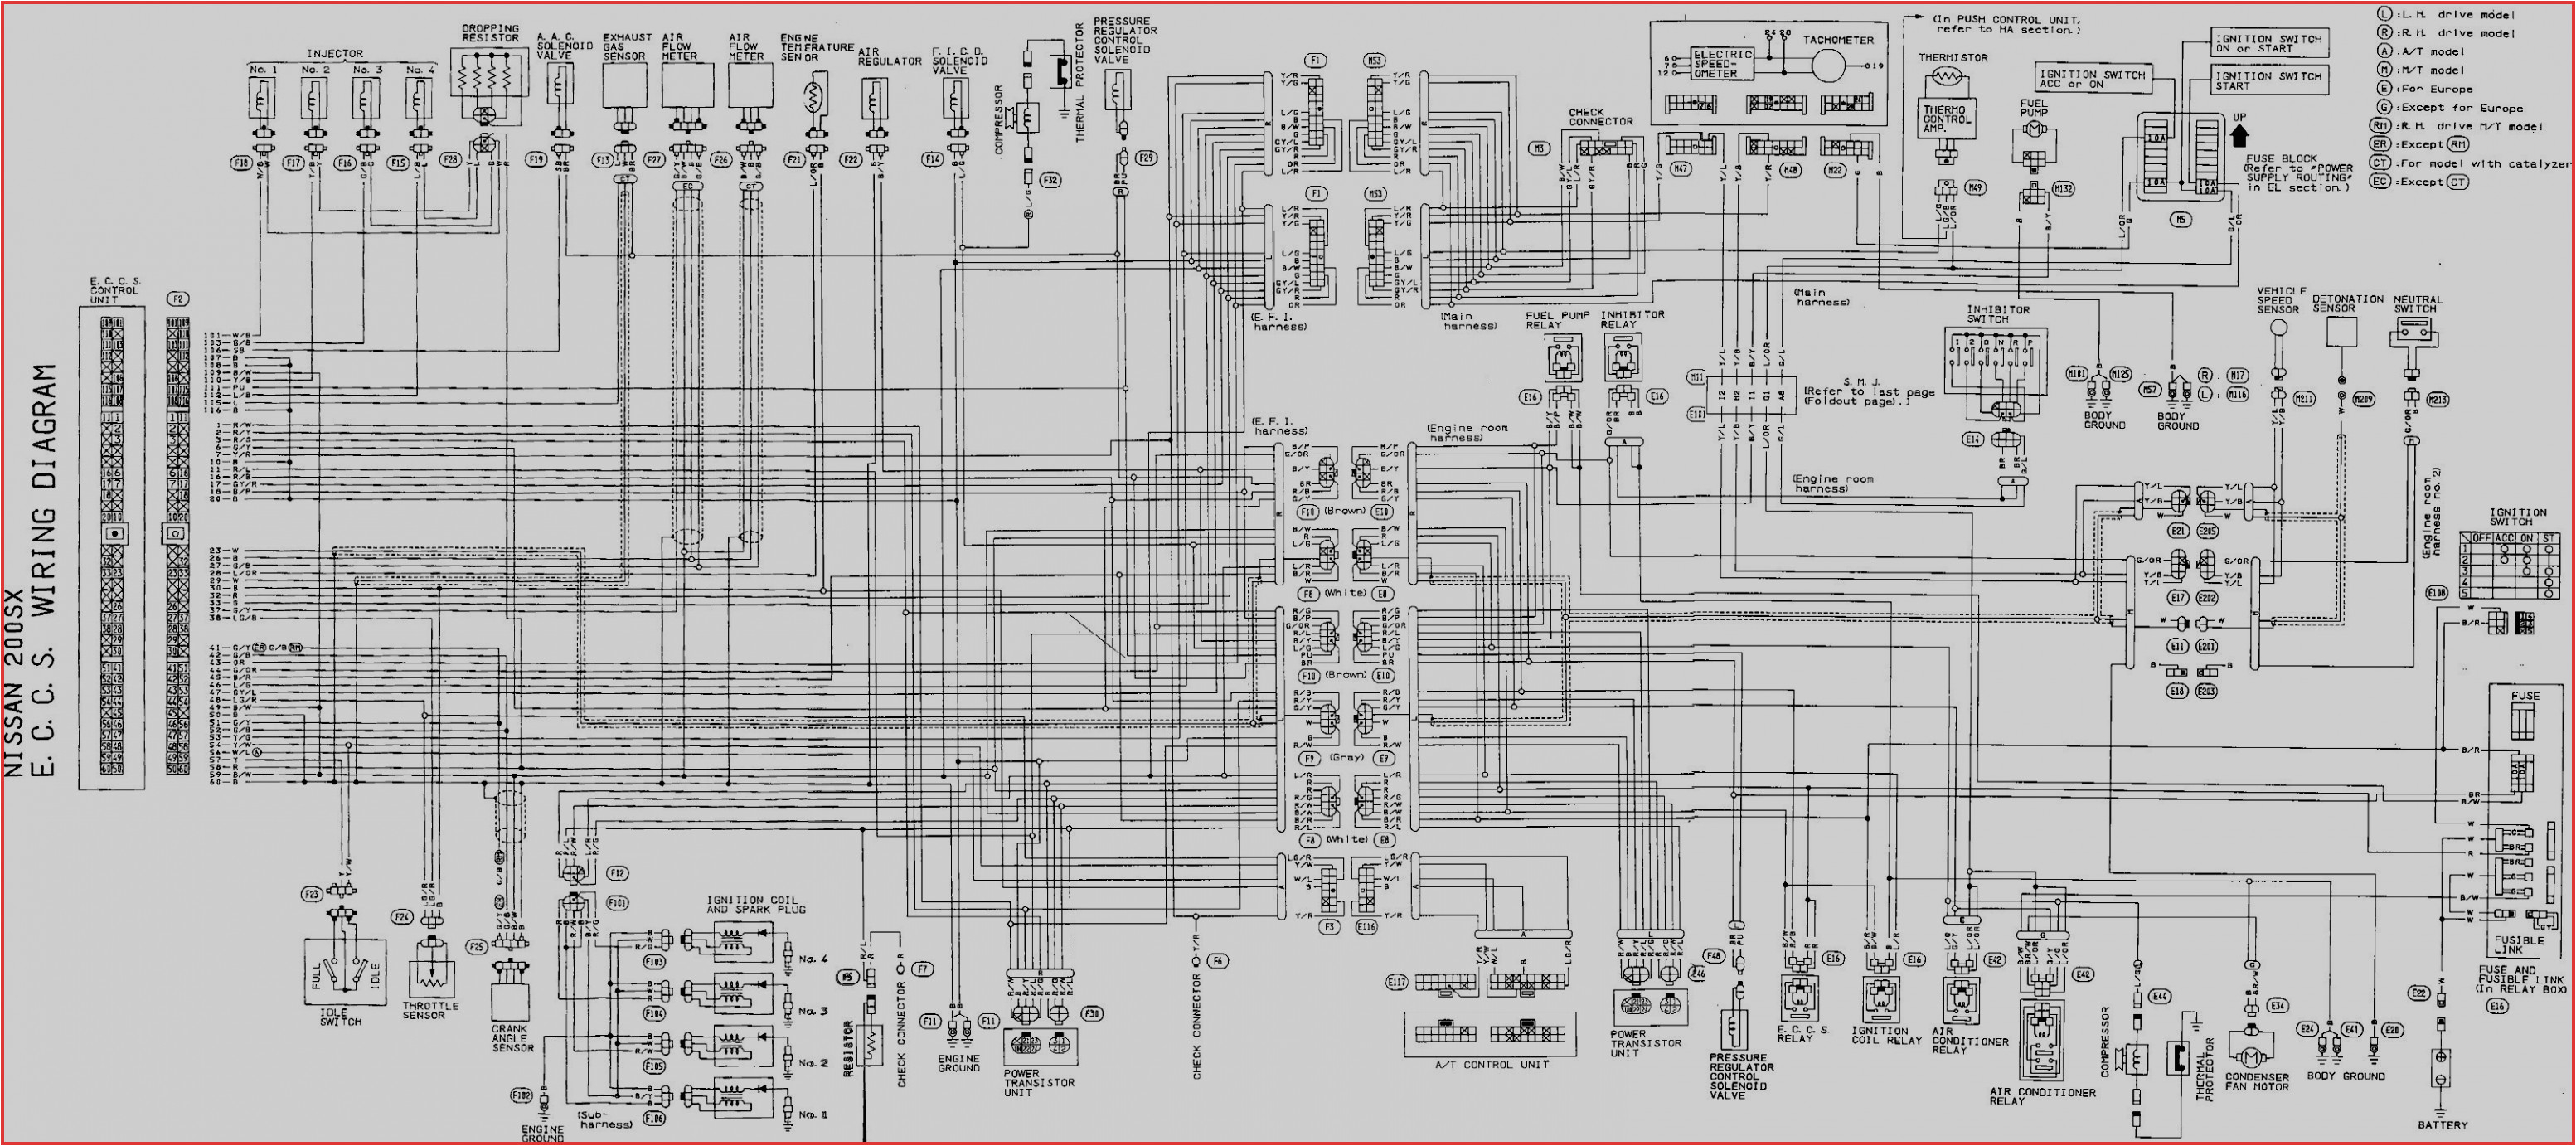 1988 ford thunderbird wiring diagram 1990 300zx wiring diagram reinvent your wiring diagram e280a2 of 1988 ford thunderbird wiring diagram jpg